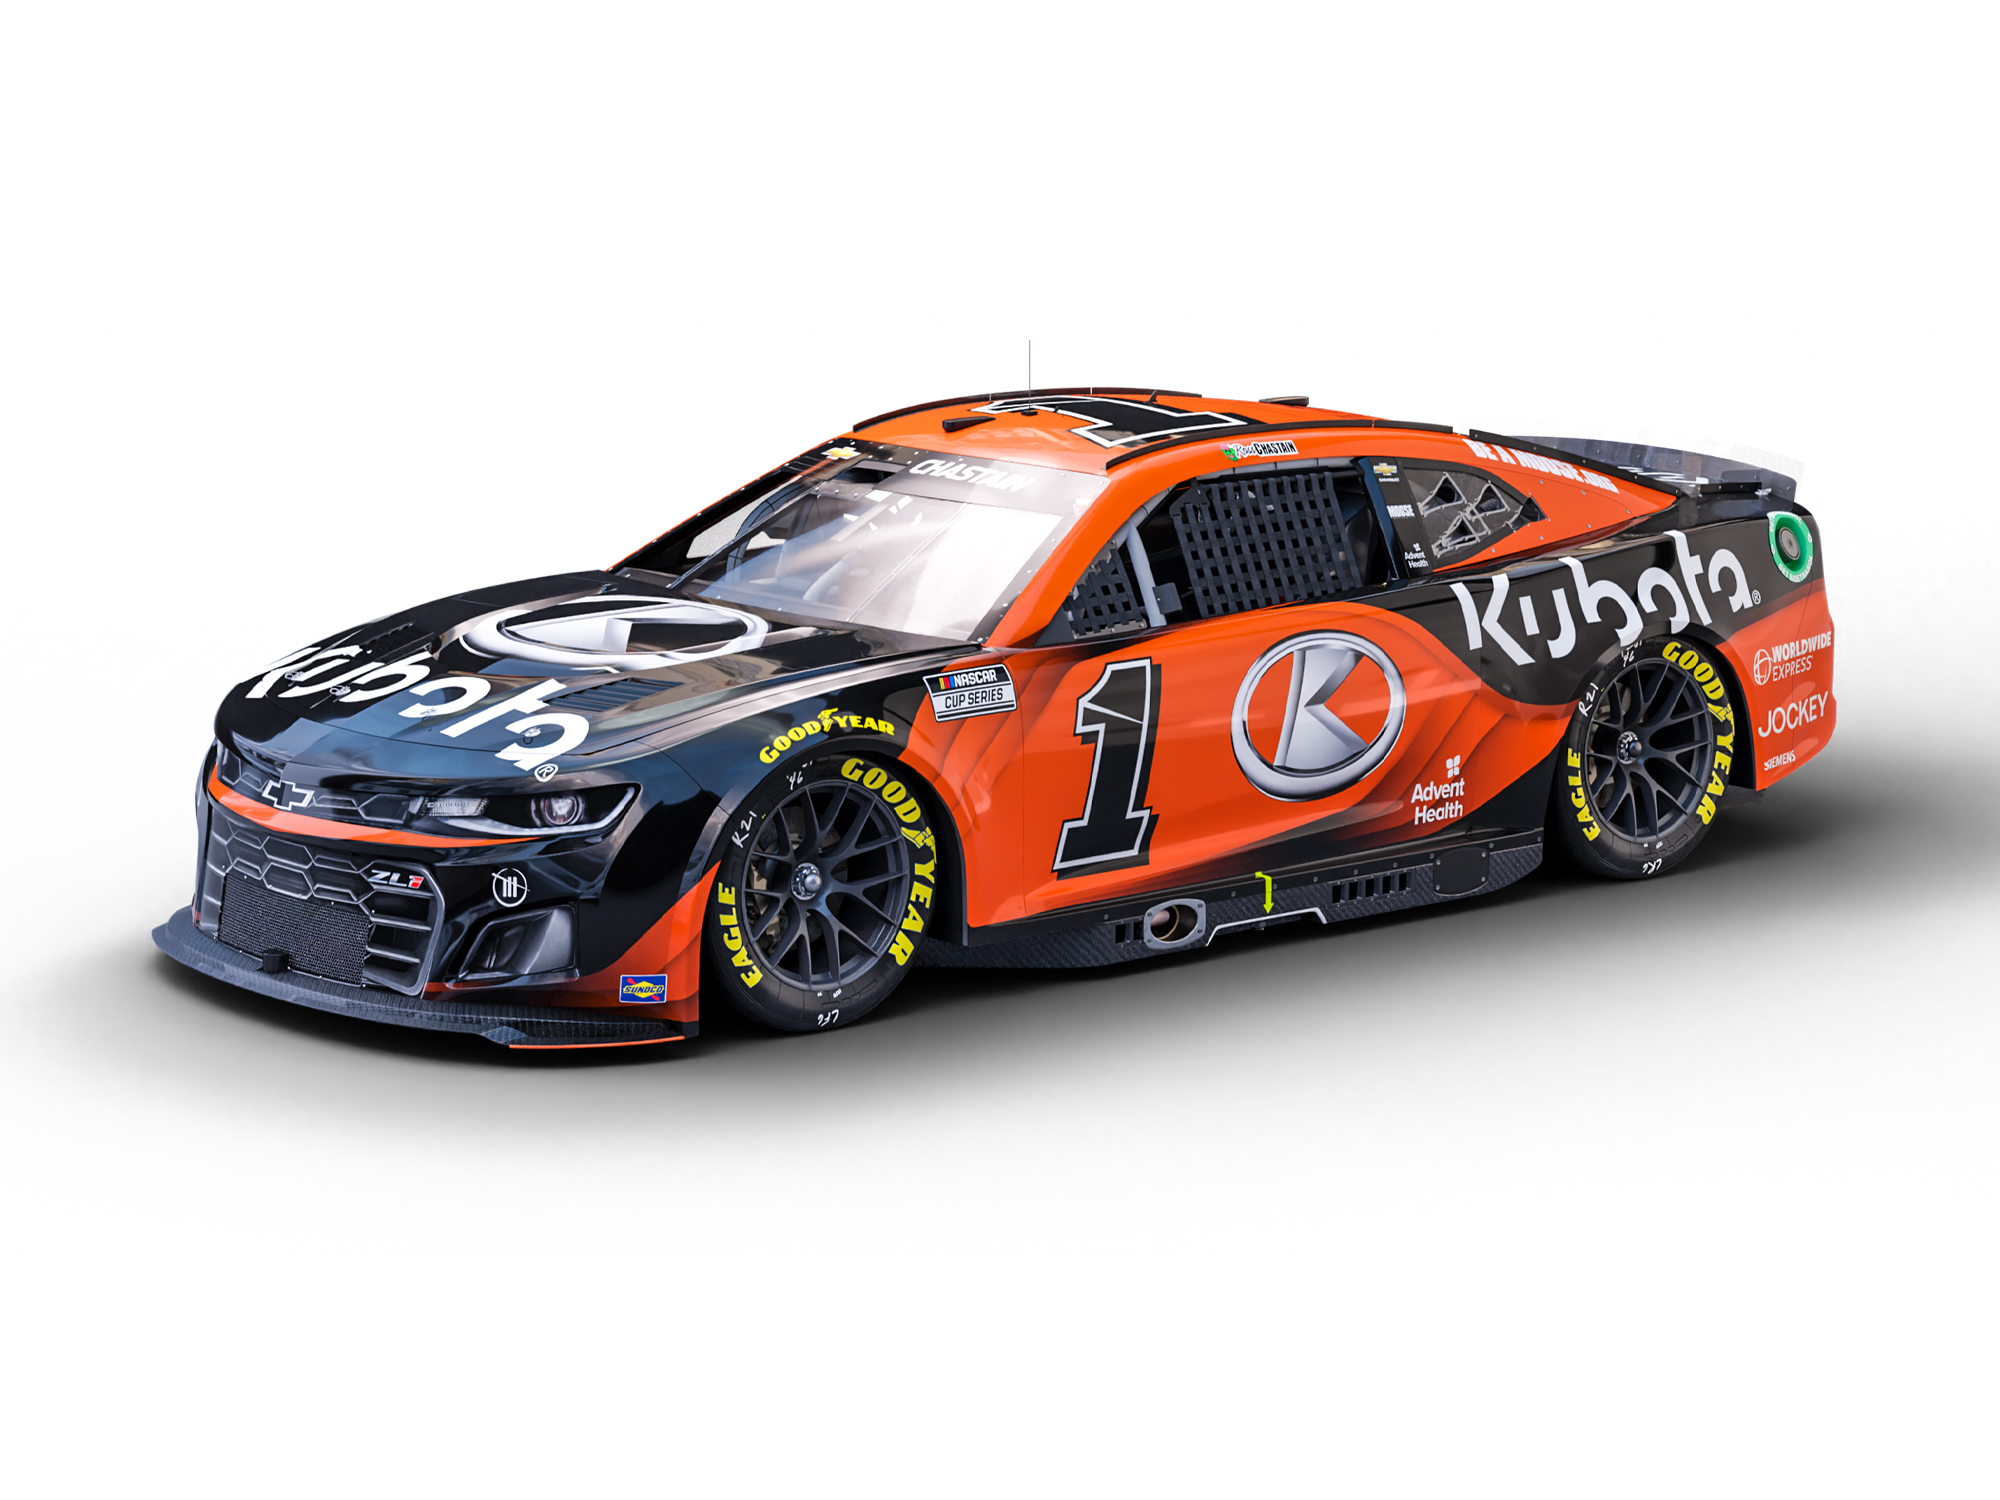 2023 Ross Chastain Trackhouse Racing Kubota paint scheme NASCAR Cup Series No. 1 car paint schemes